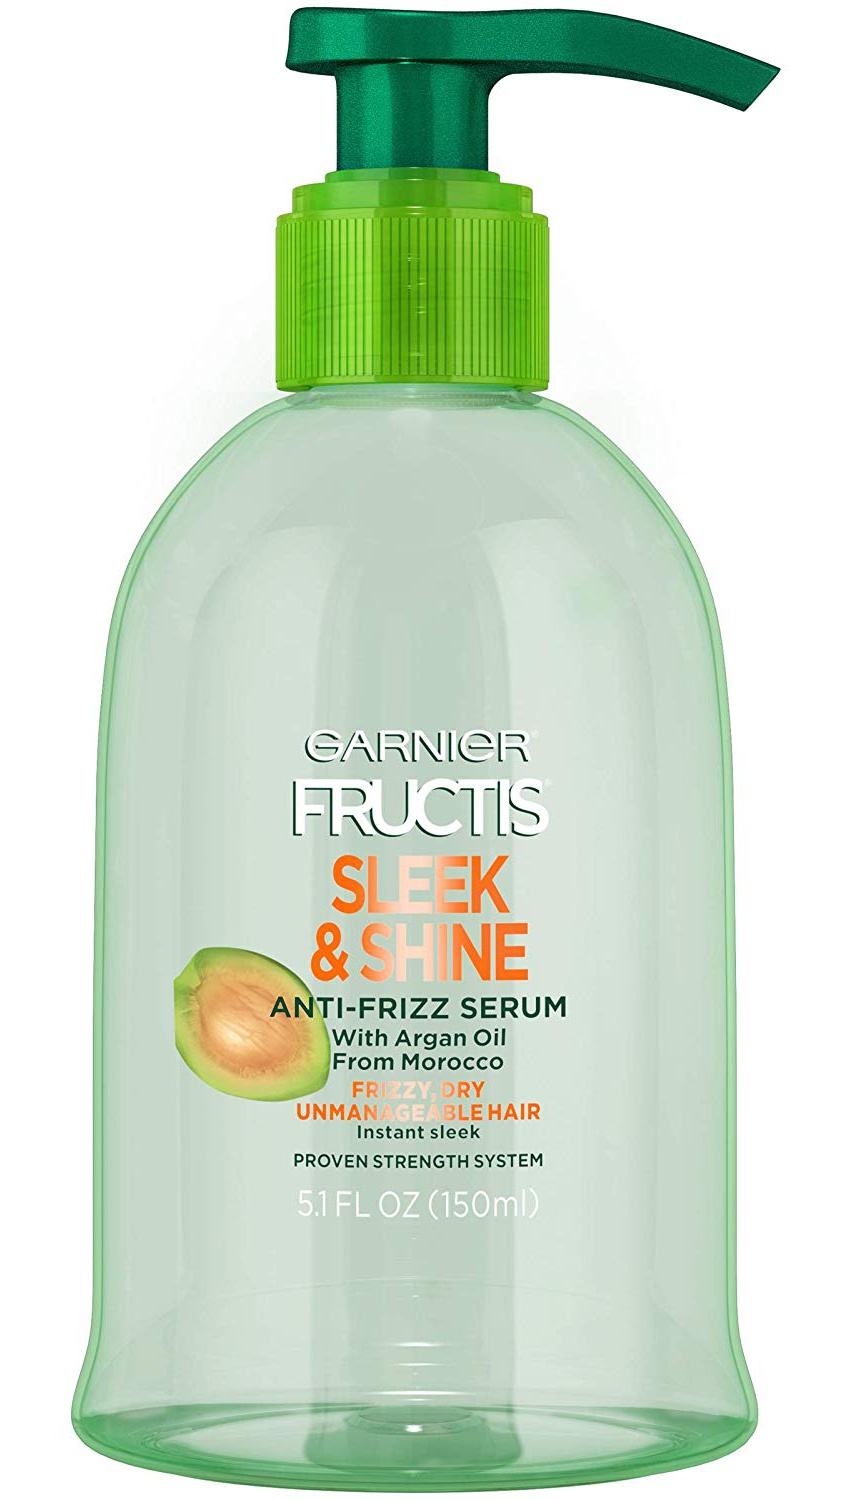 Garnier Fructis Sleek And Shine Anti-Frizz Serum